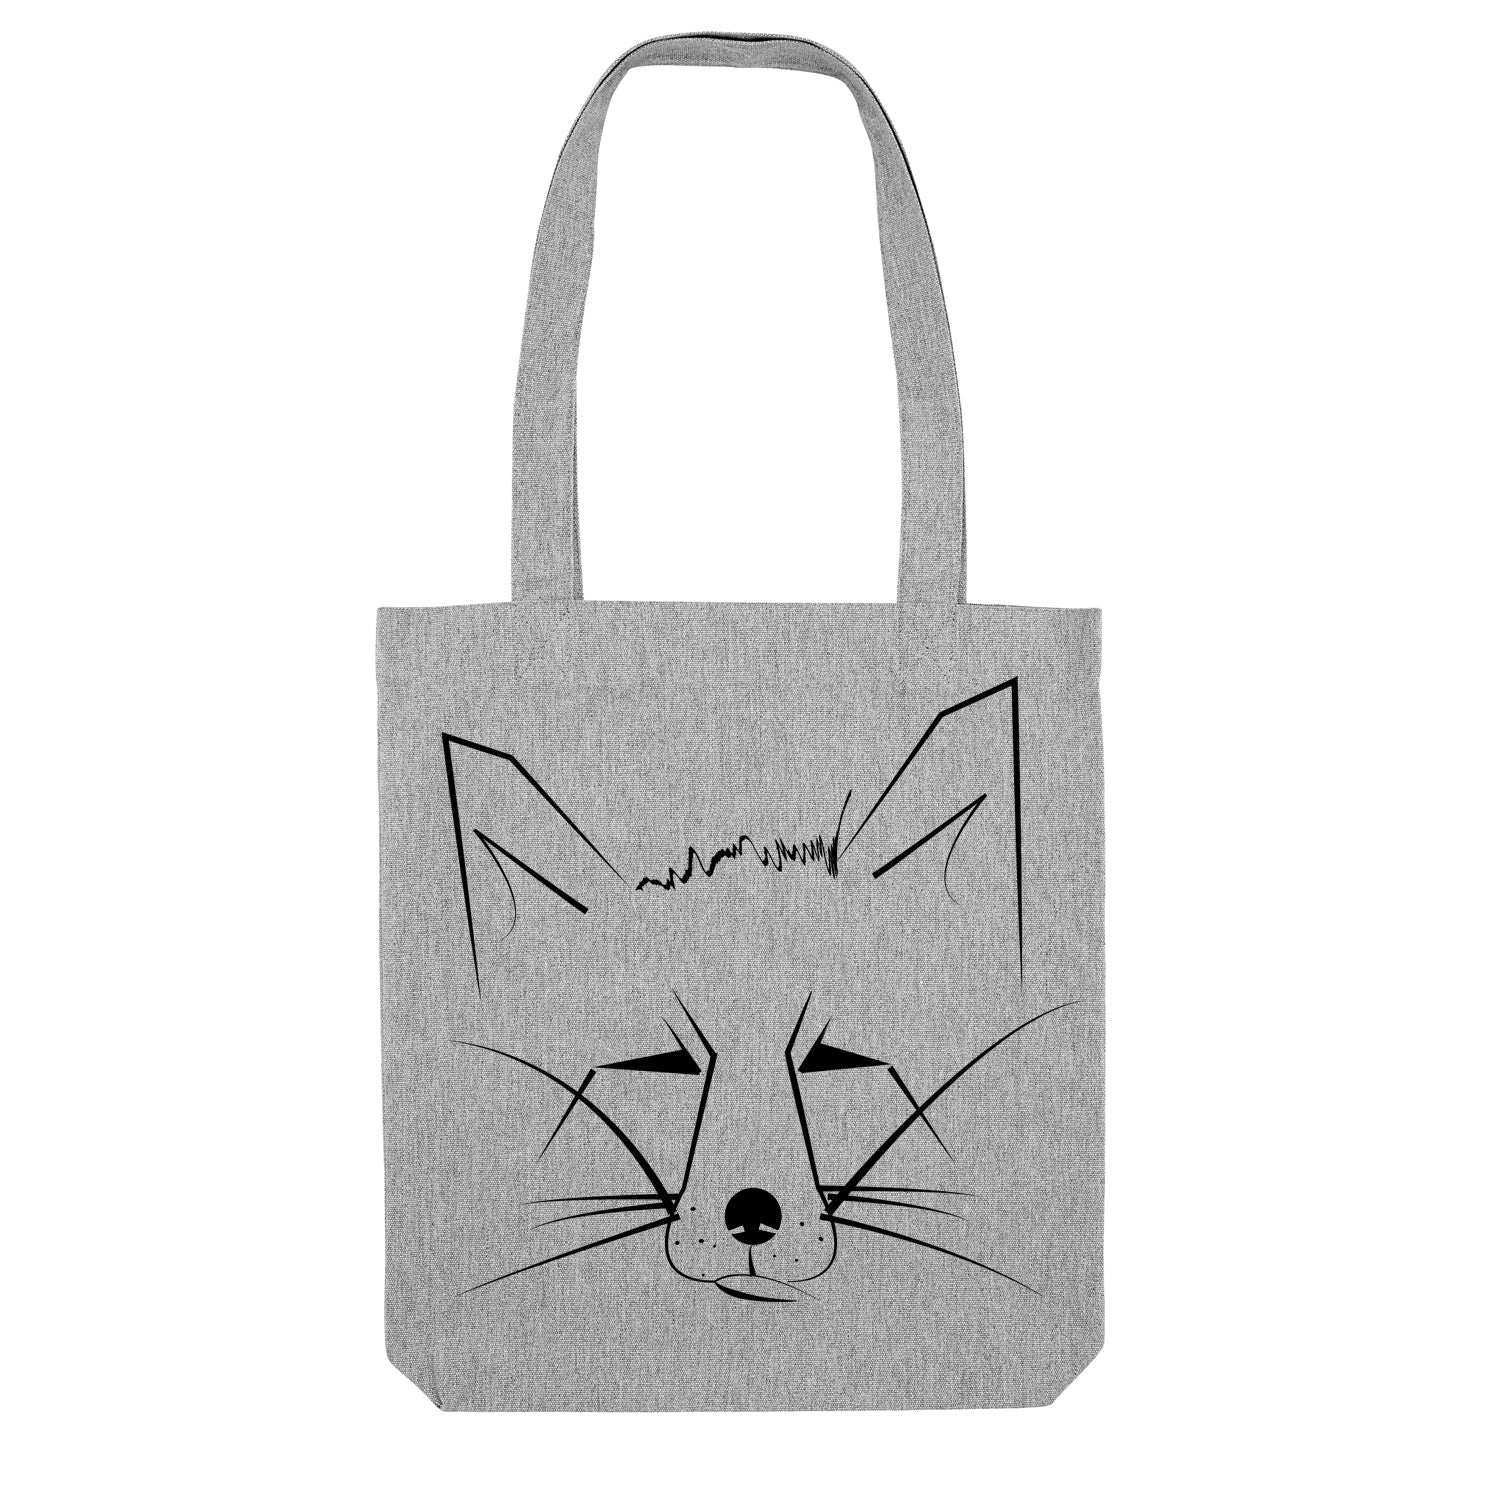 New fox tote bag